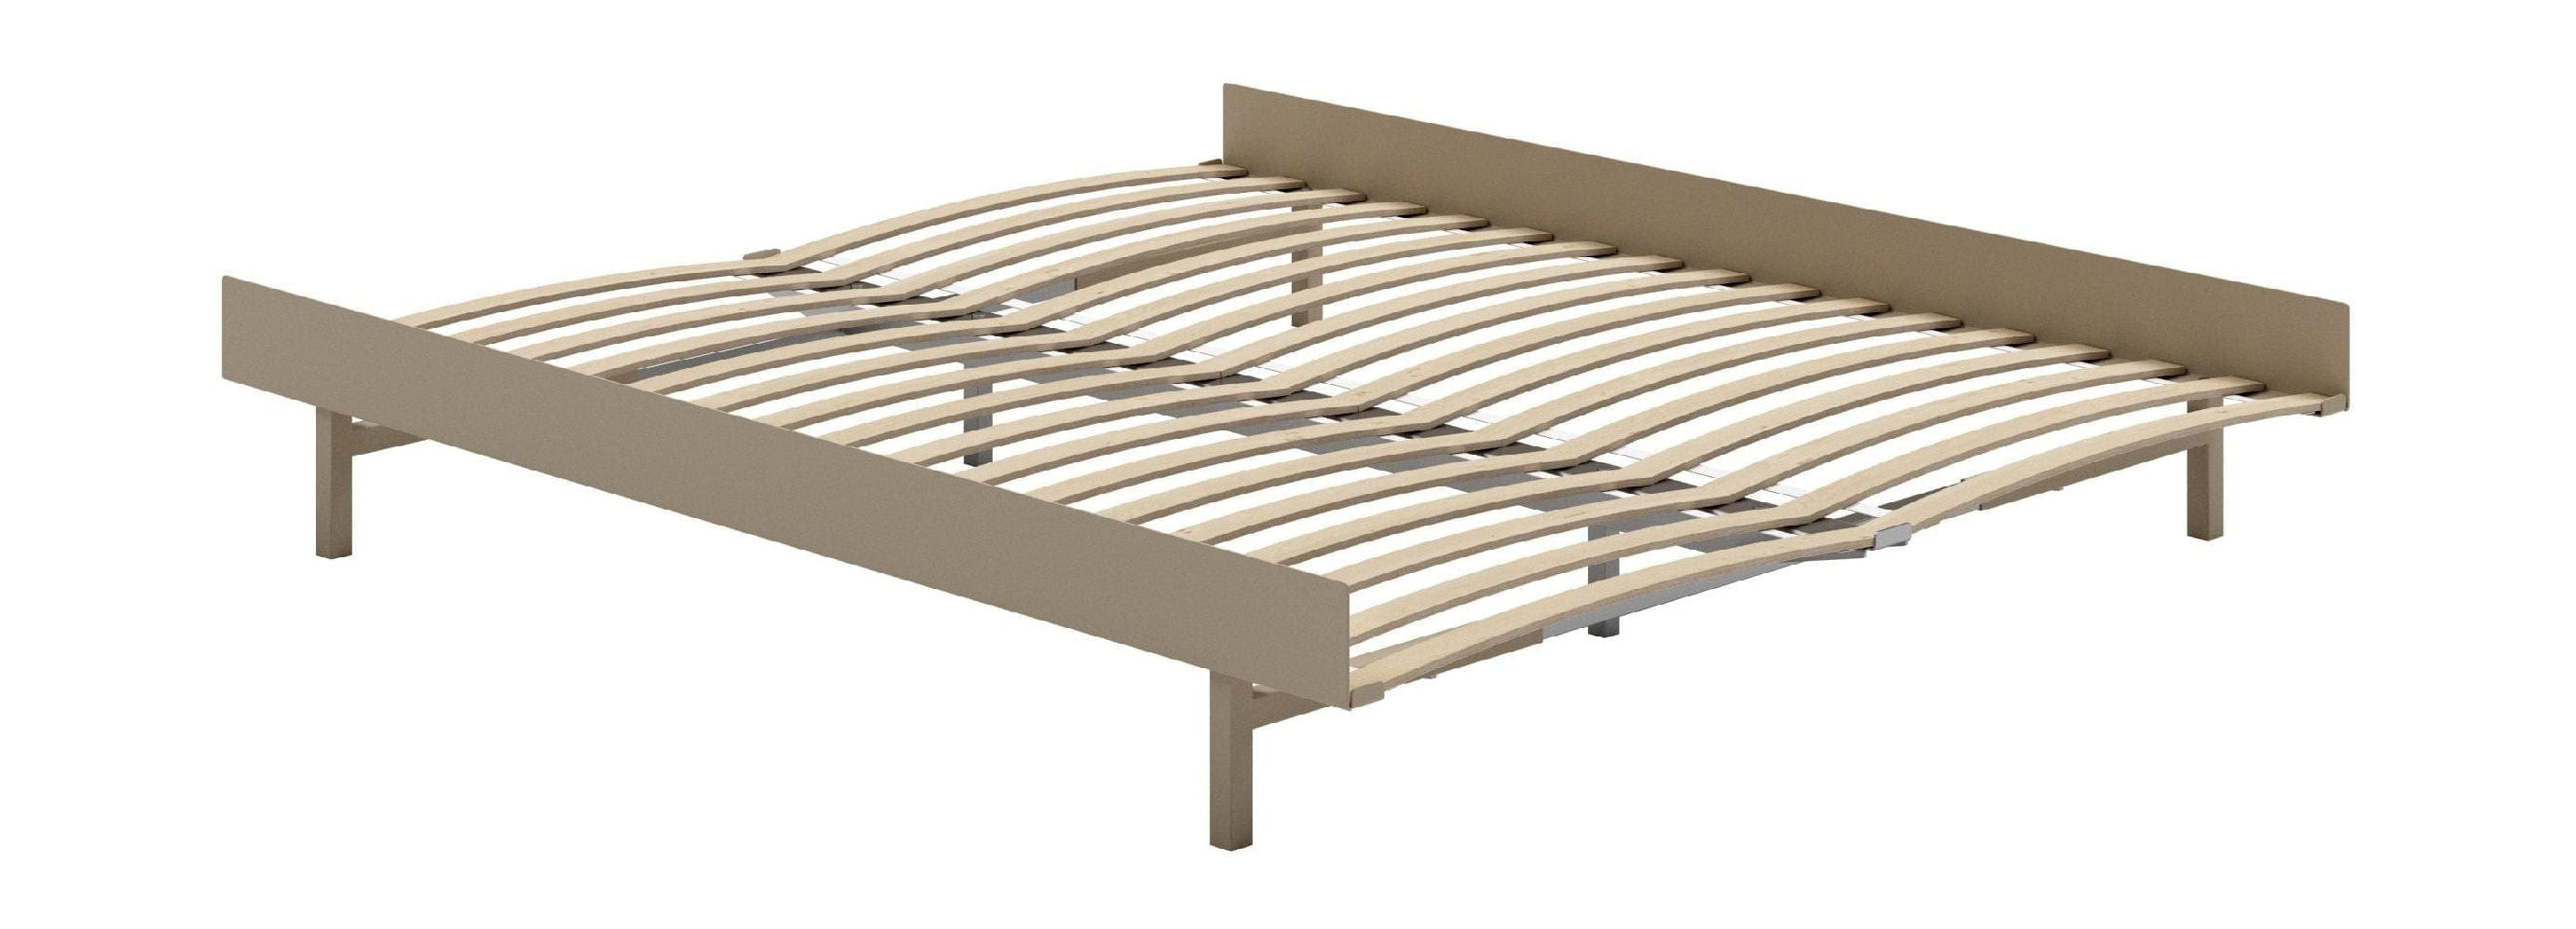 Moebe -säng med sängen 160 cm, sand